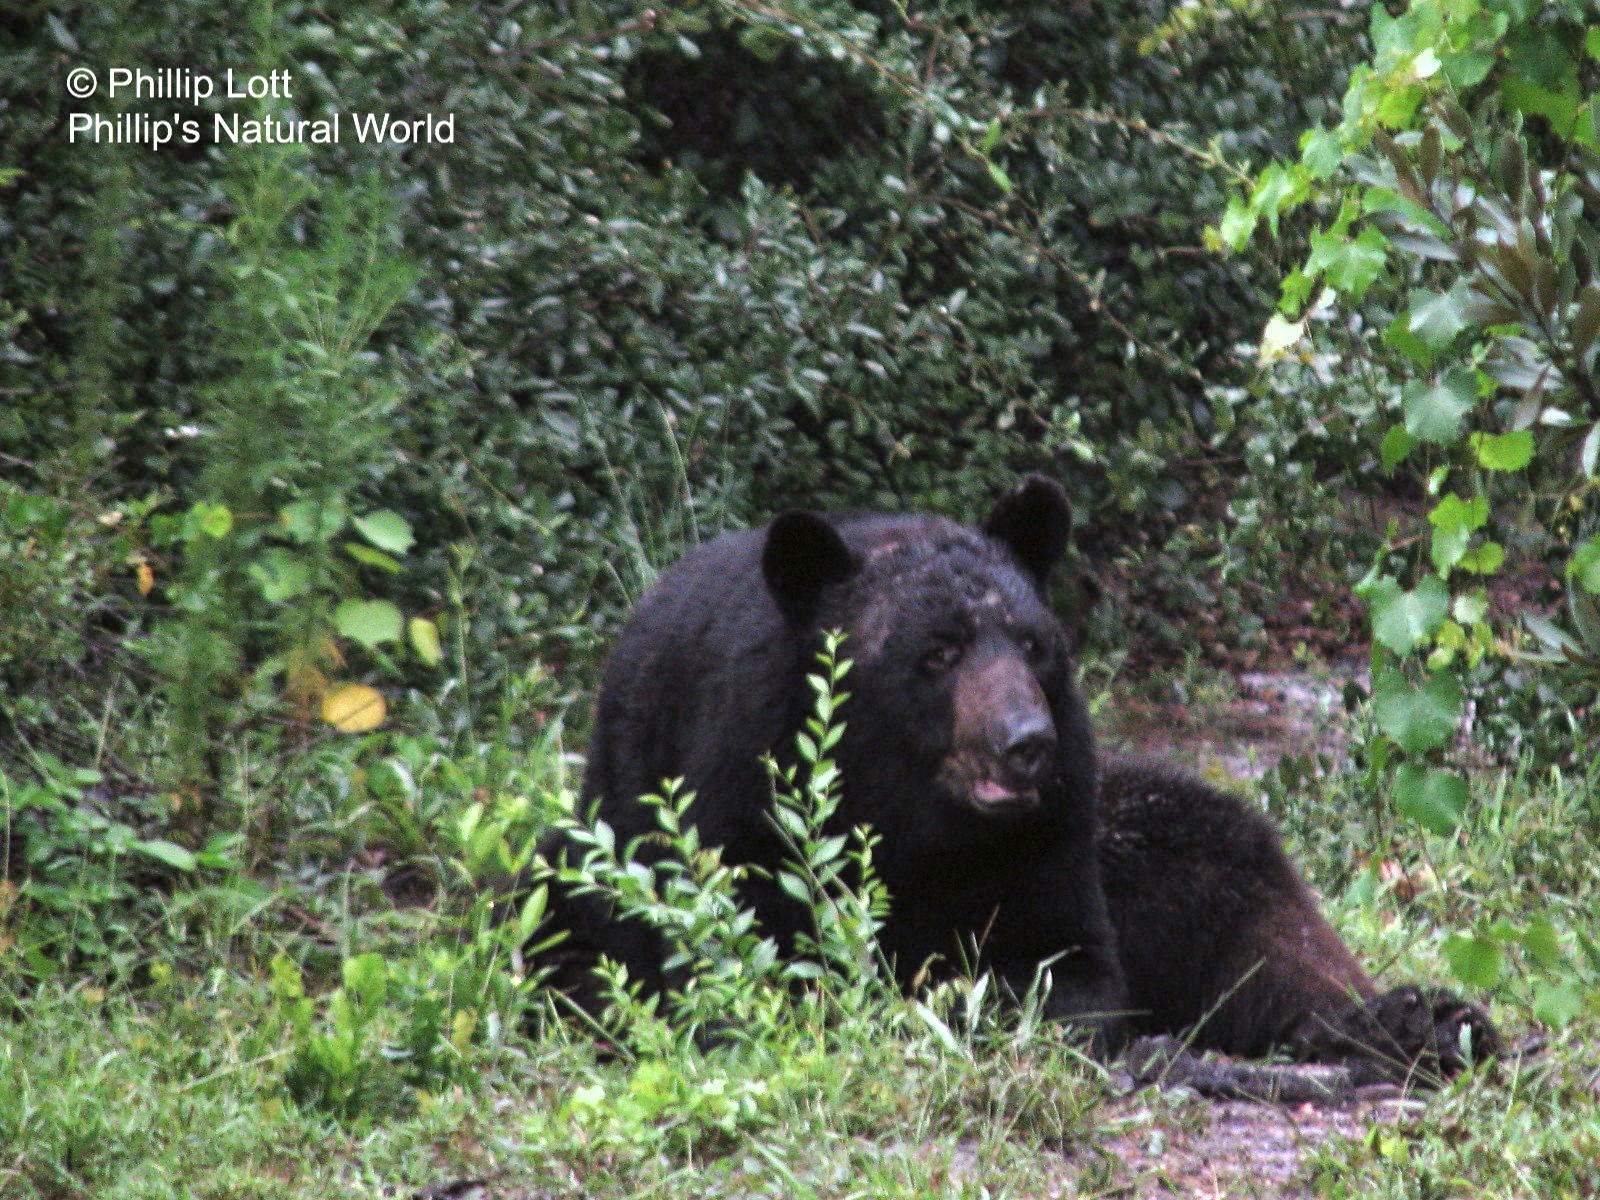 Florida to Kill Beloved Black Bears